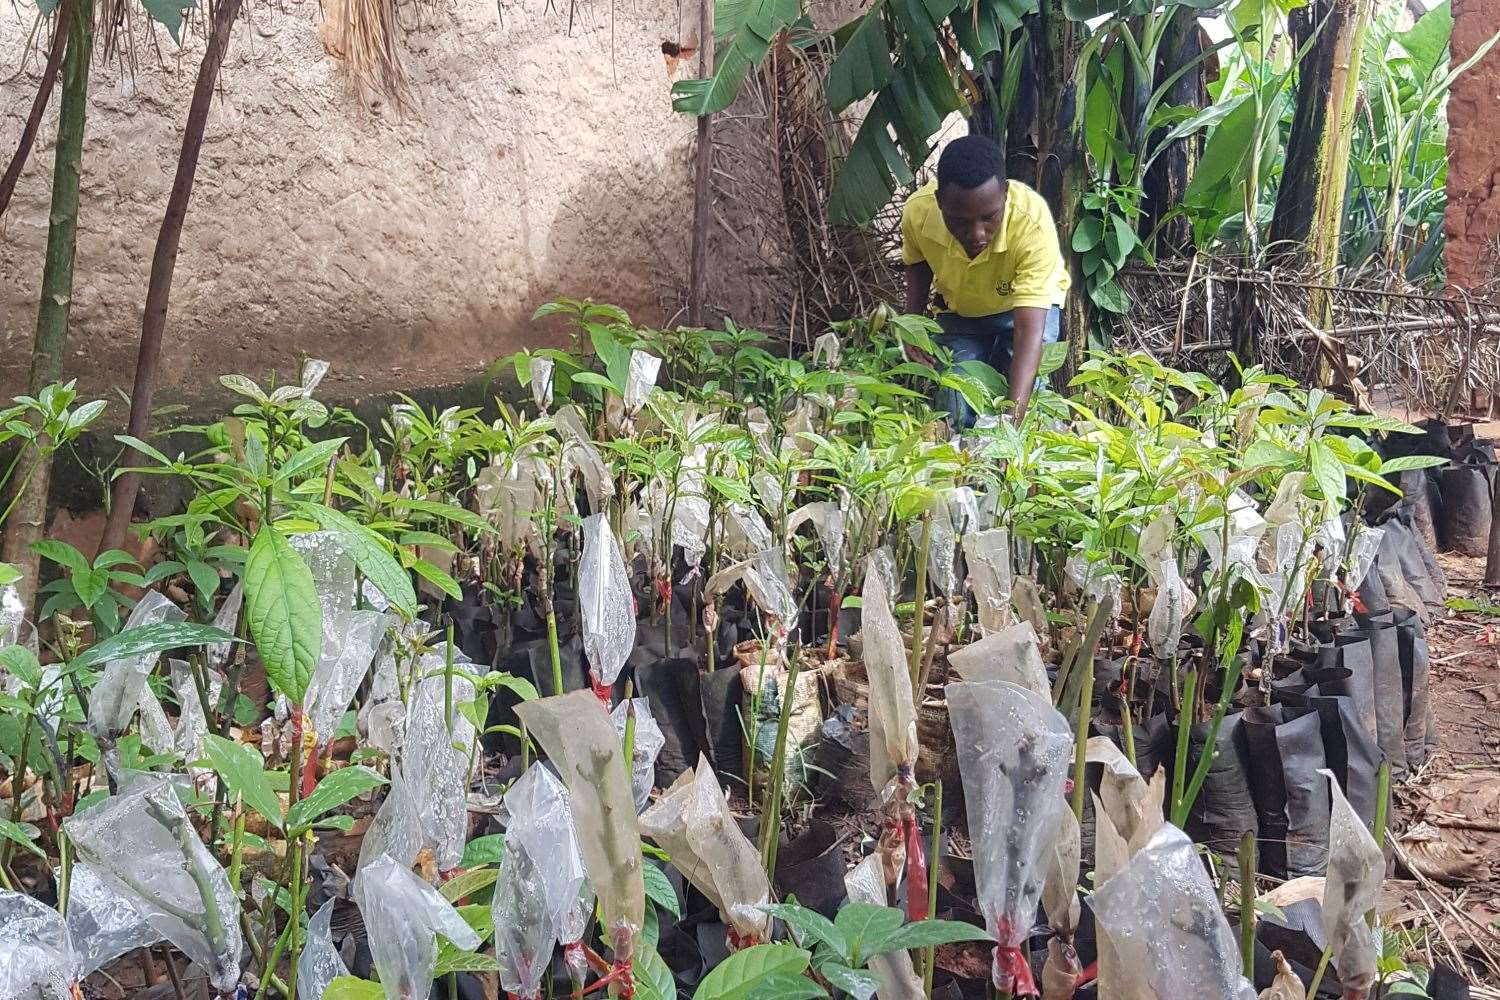 Farmer Jolis Bigirimana tends to his avocado crops (Christian Aid/PA)